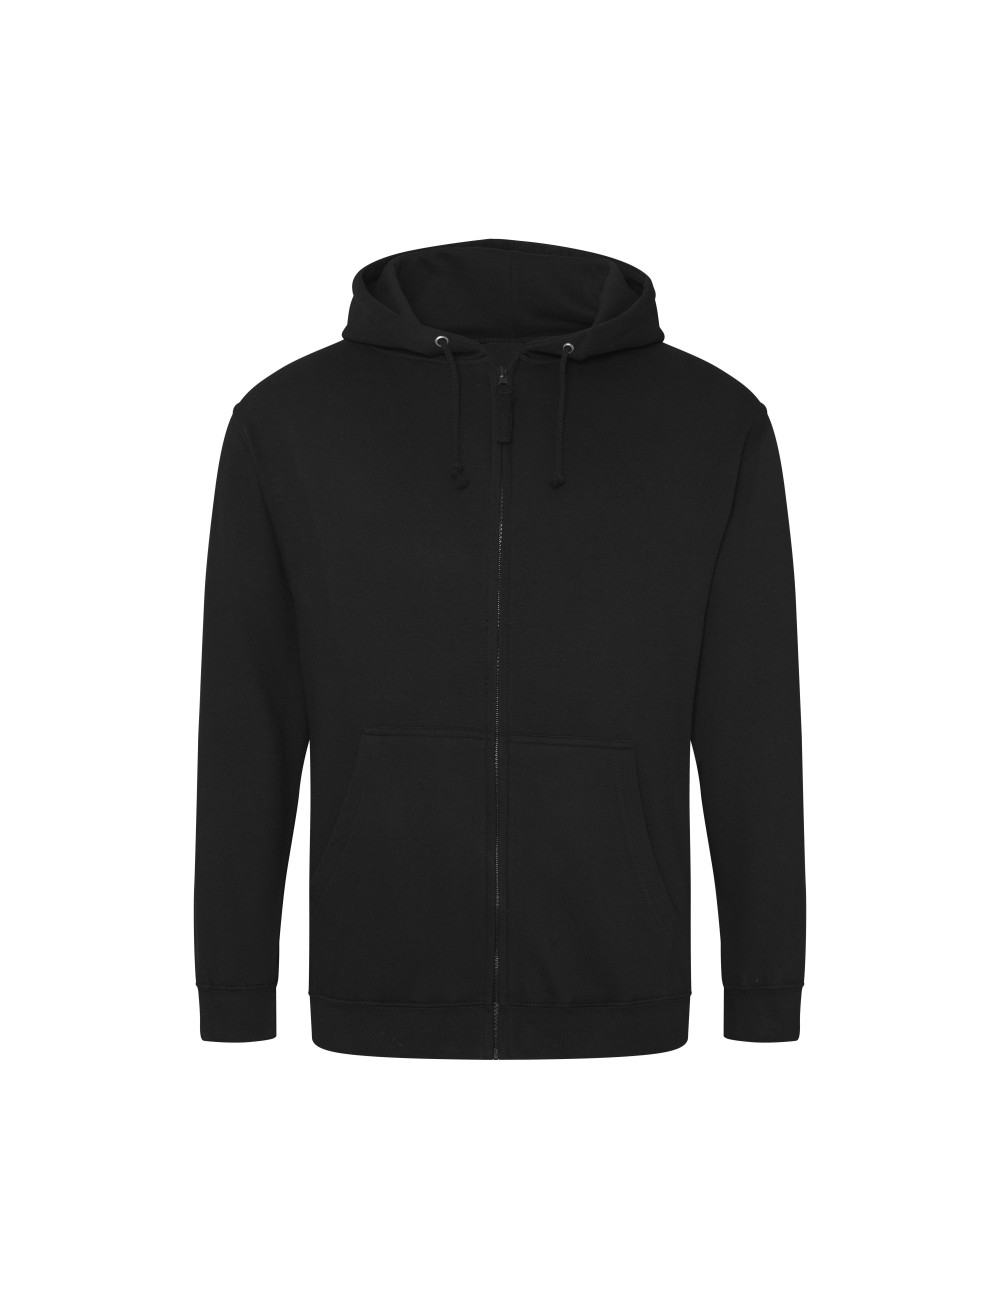 AWDIS JH050 - Zipped sweatshirt  Colors:Noir profond 